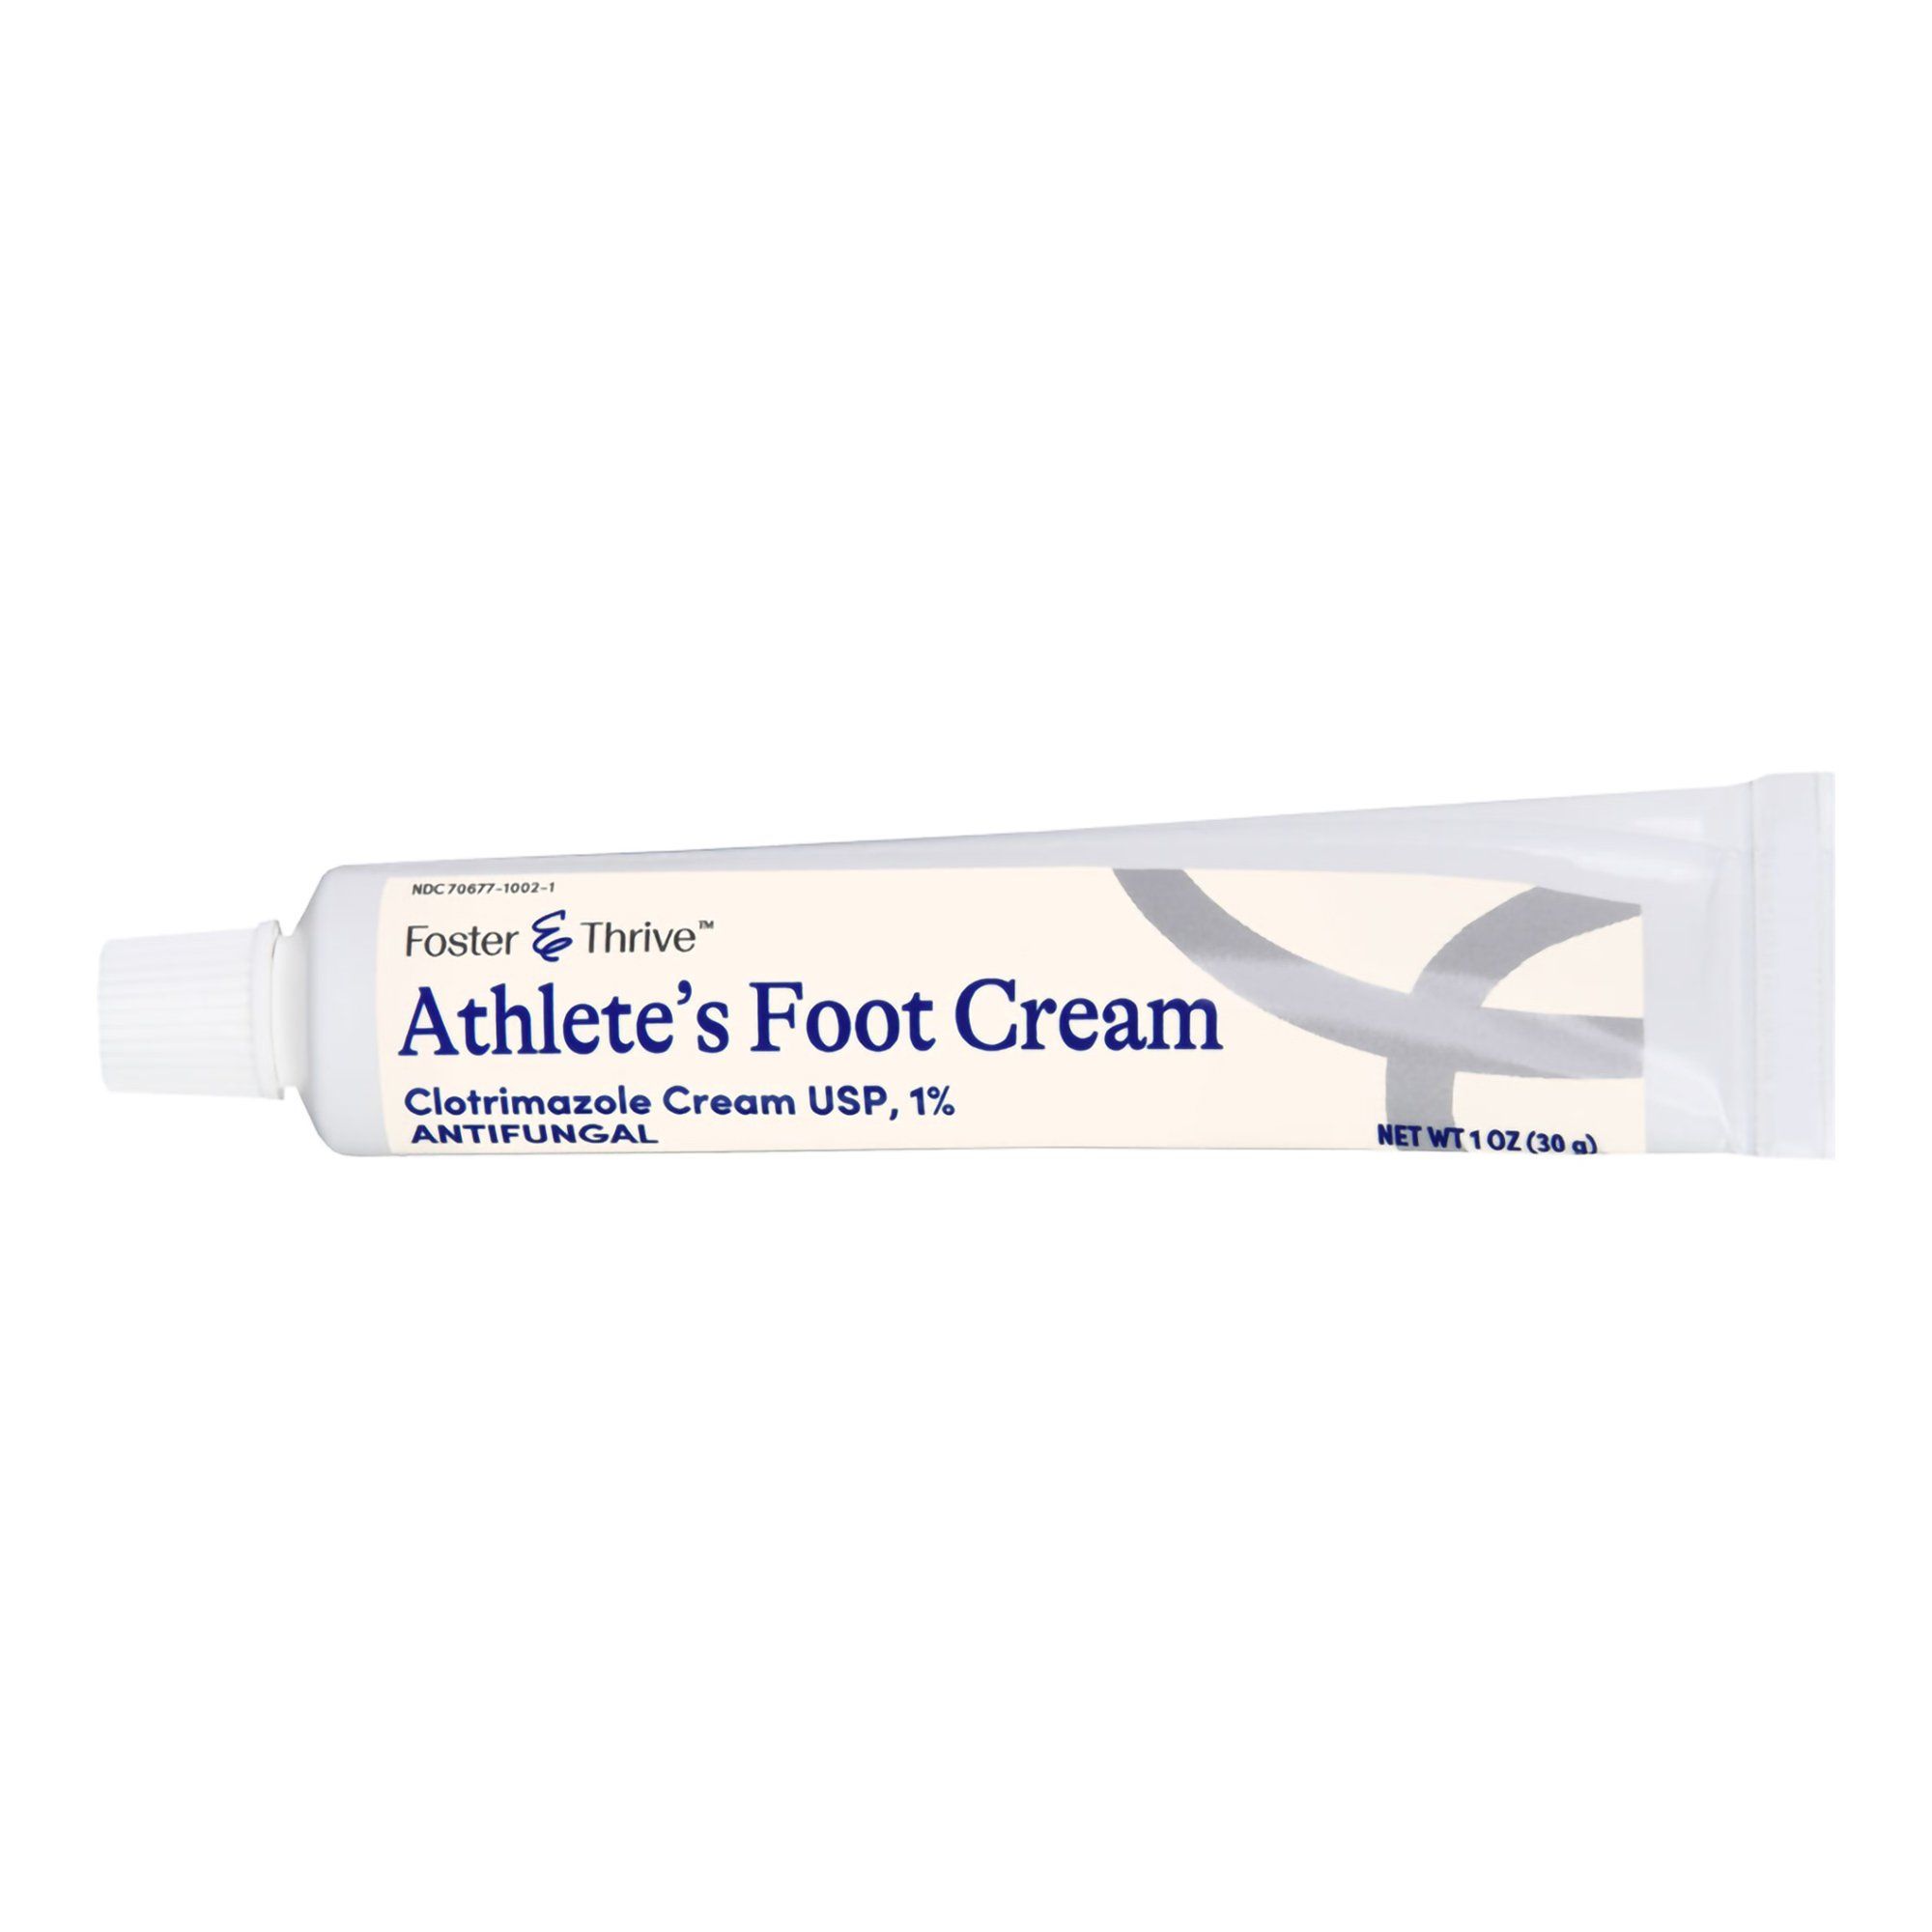 Foster & Thrive Athlete's Foot Cream Clotrimazole USP, 1% - 1 oz